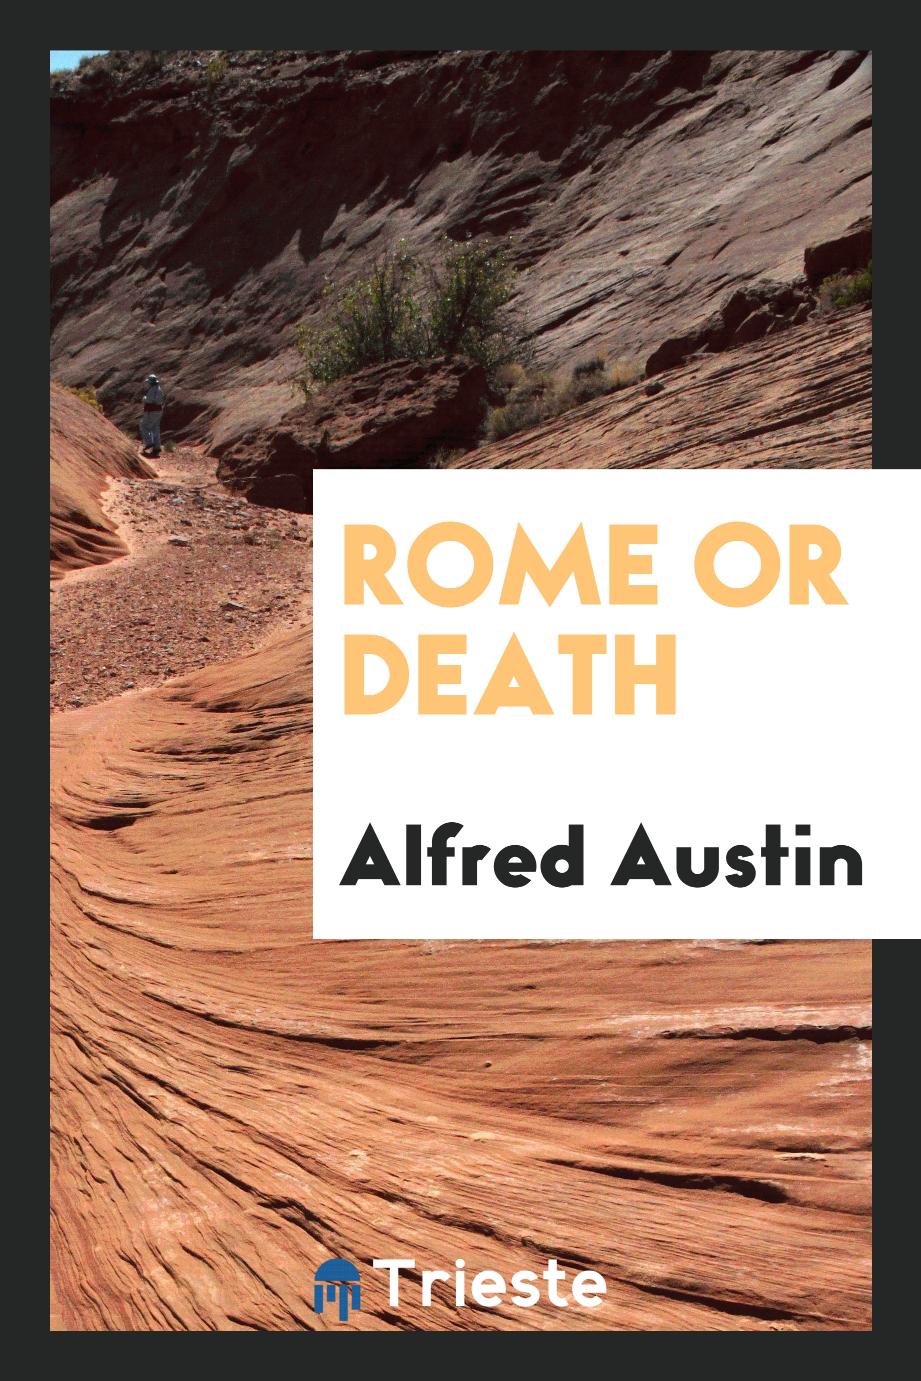 Rome or death